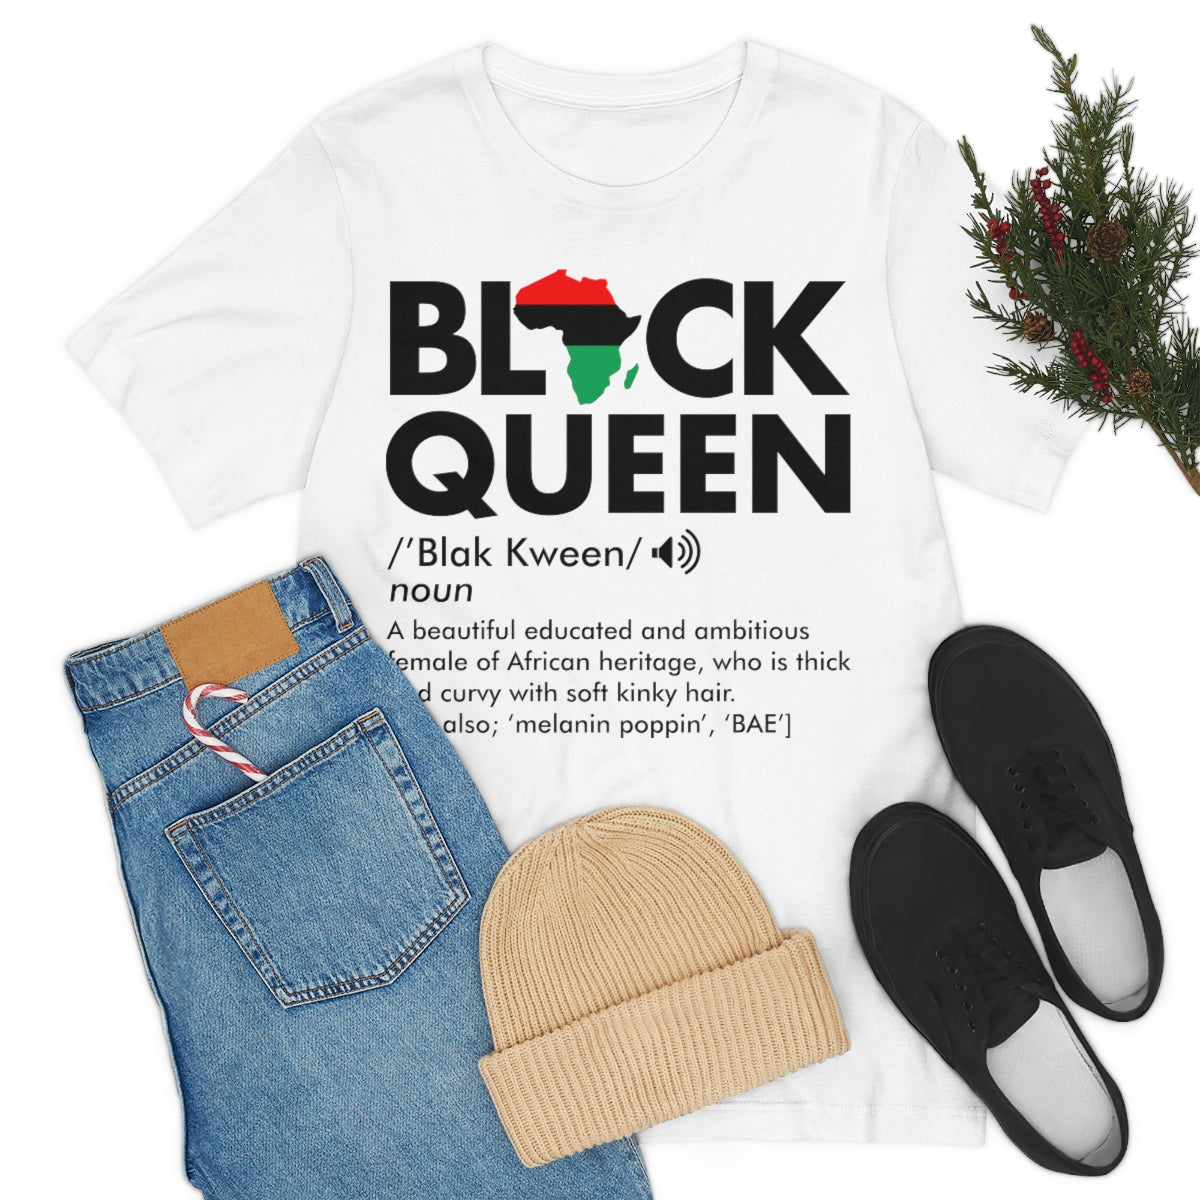 Black Queen Definition